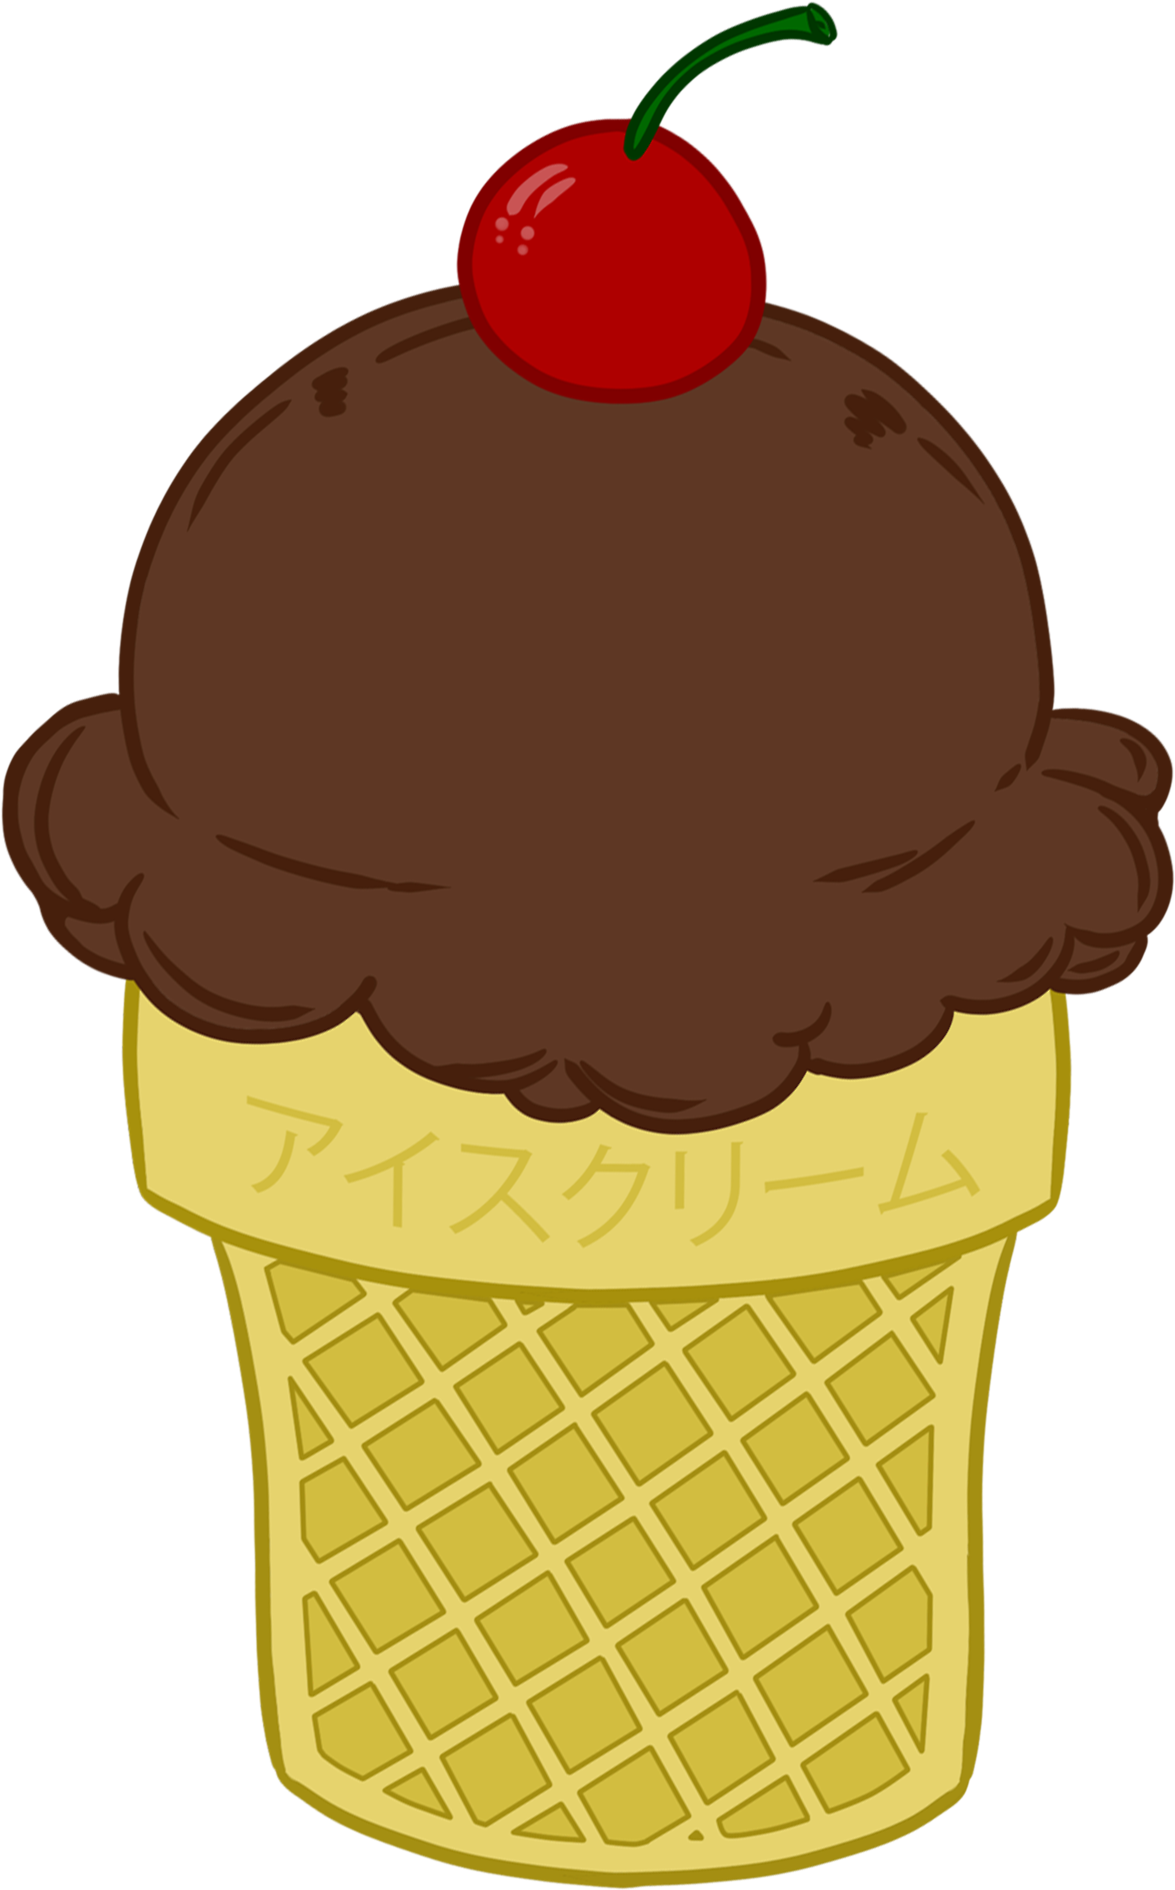 Icecream Icecream Cone Ice Cream Ice Cream Cone Vanilla - Redbubble (1207x1920)